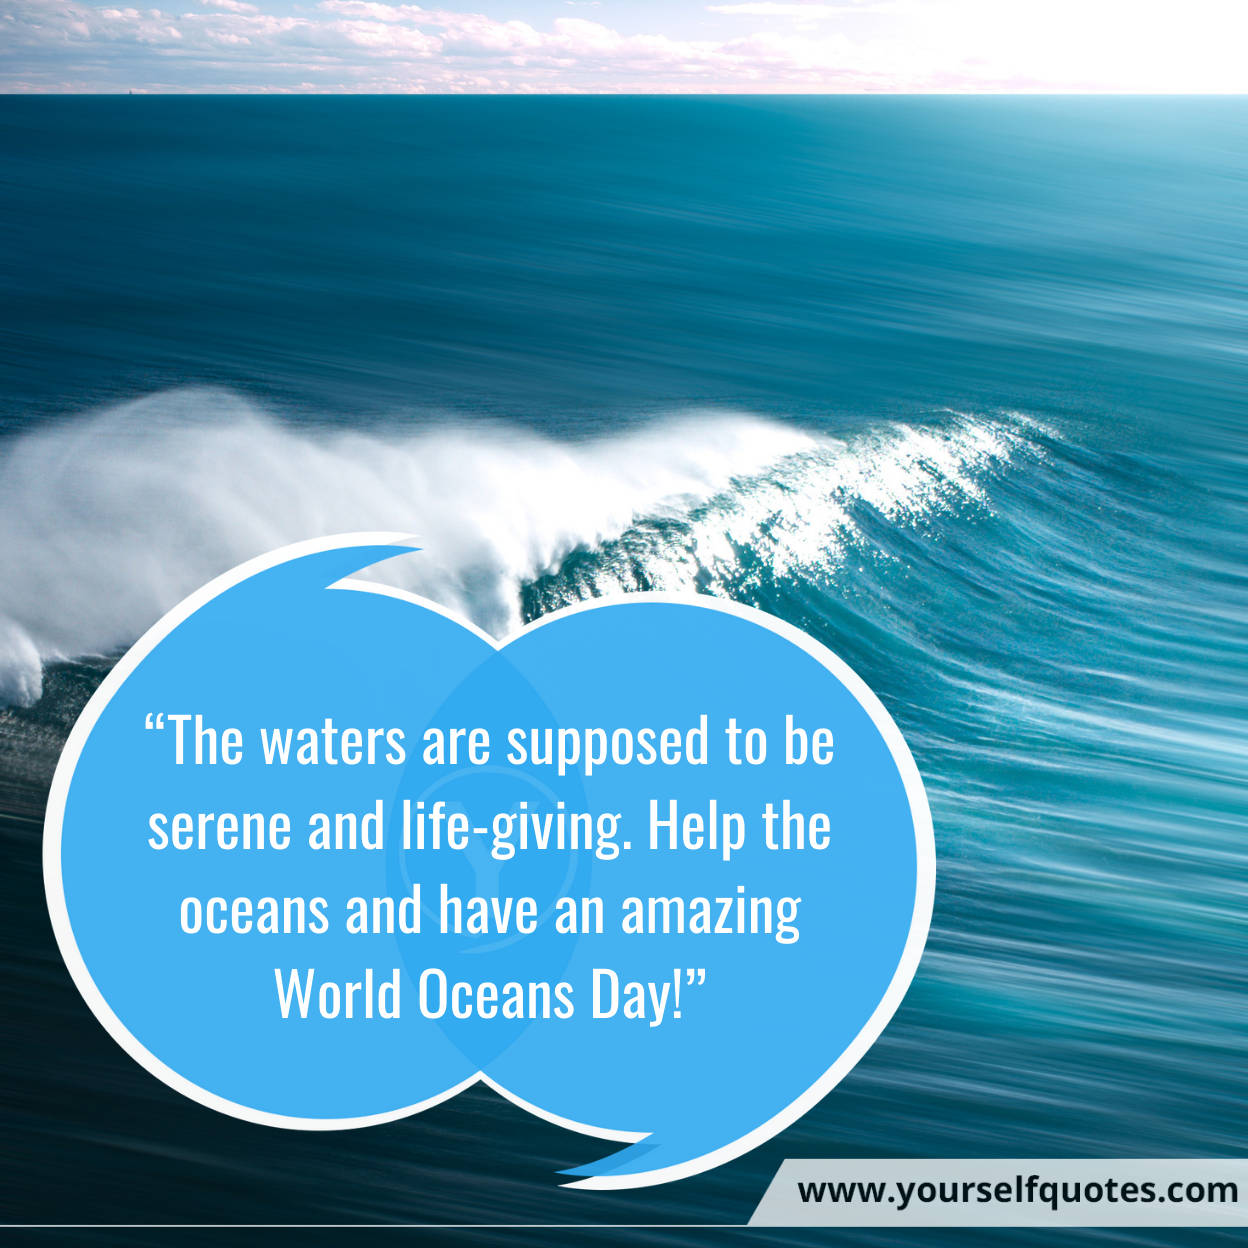 World Ocean Day Messages